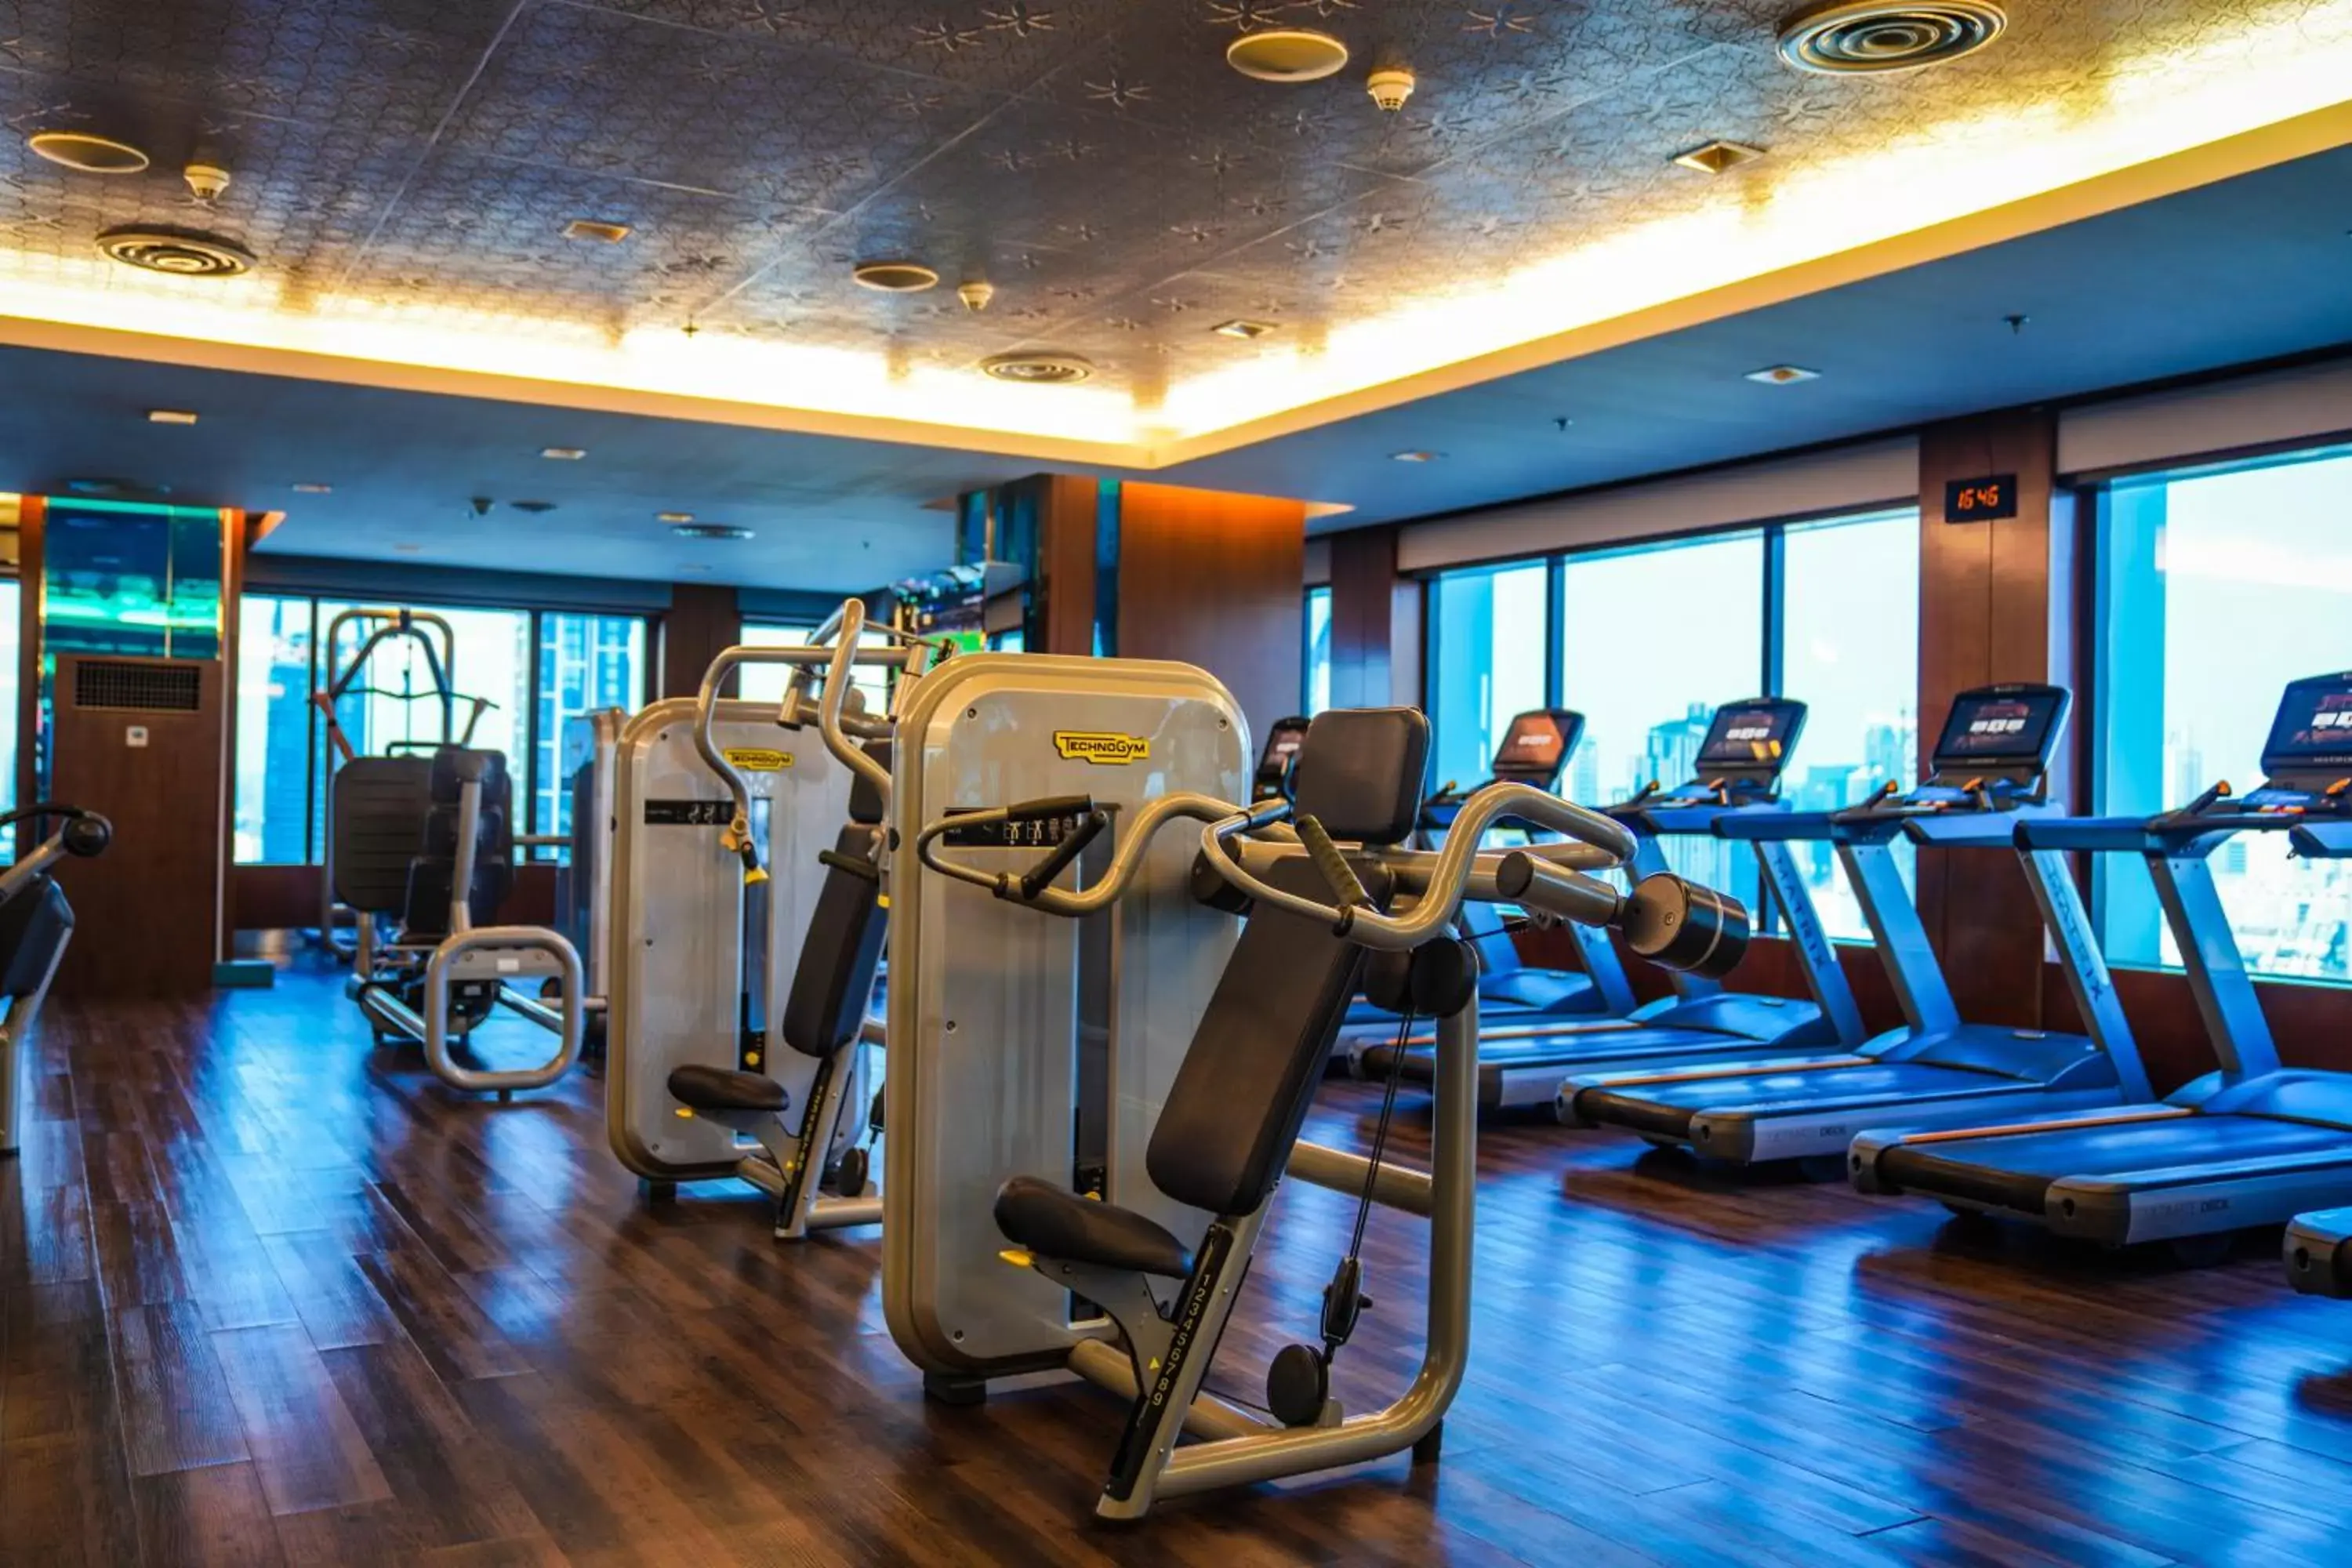 Fitness centre/facilities, Fitness Center/Facilities in Renaissance Bangkok Ratchaprasong Hotel